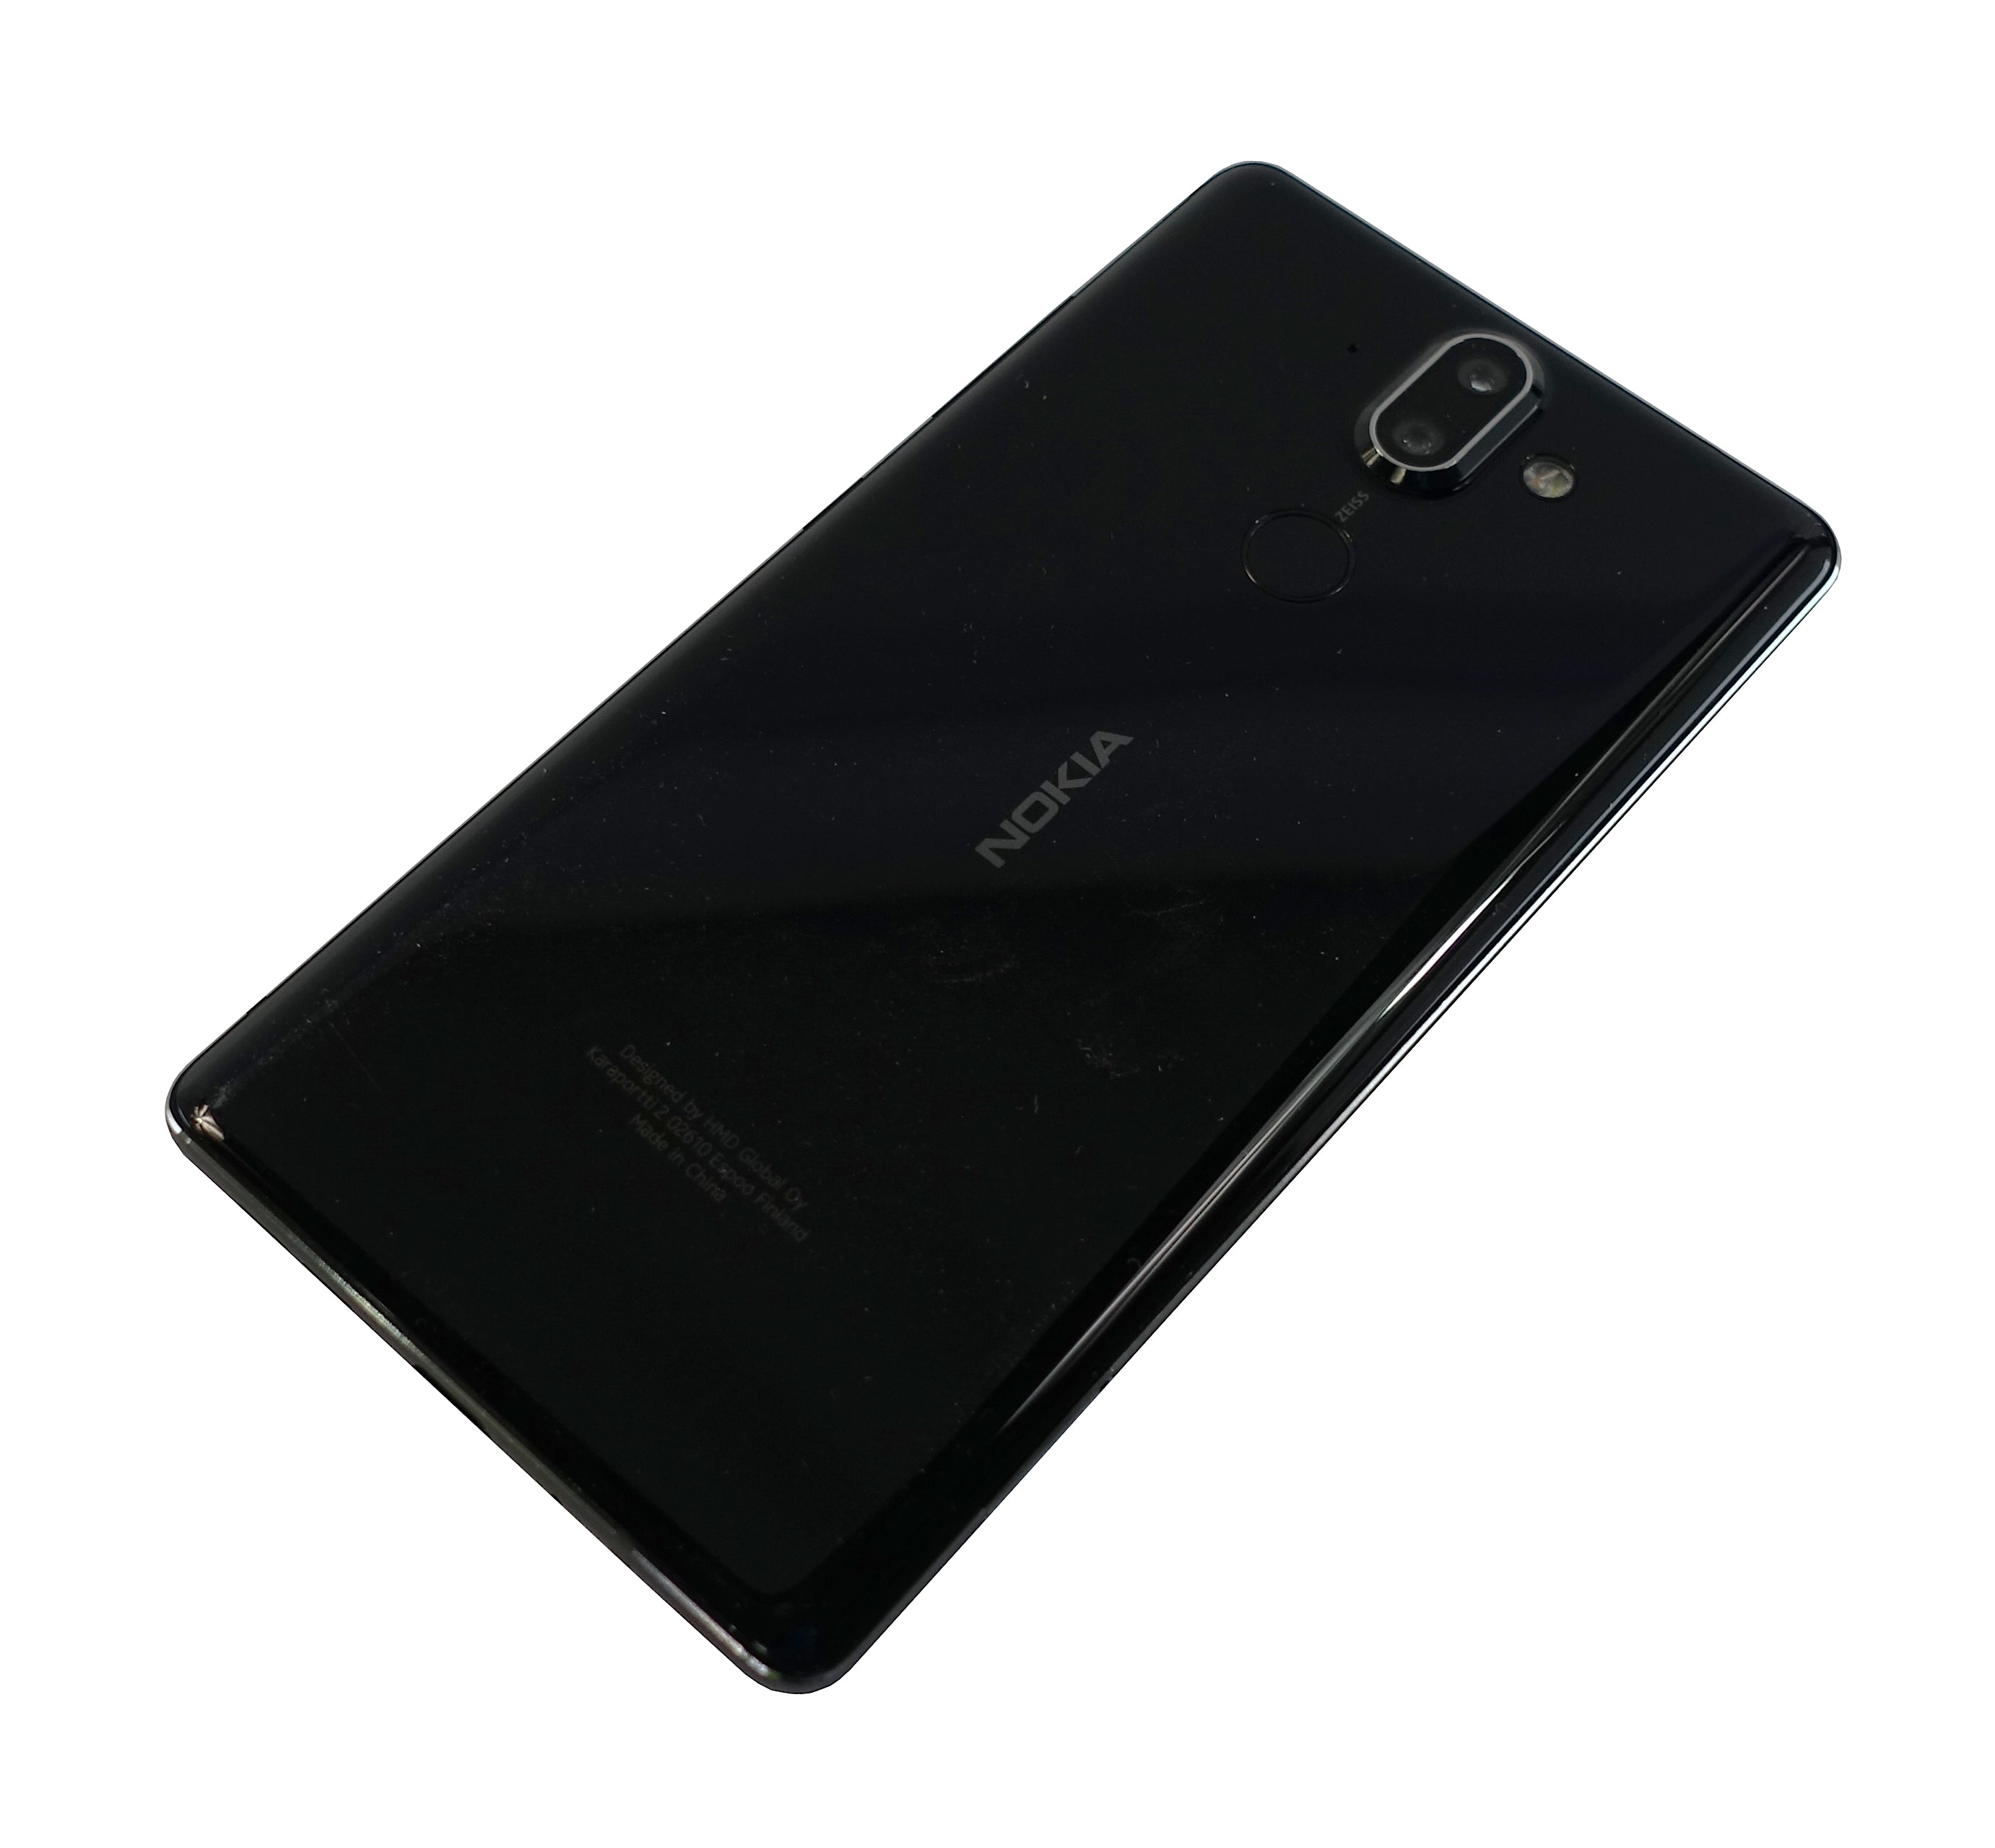 Nokia 8 Sirocco Smartphone, 5.5", 64GB, WiFi, Network Unlocked, Black, TA-1005